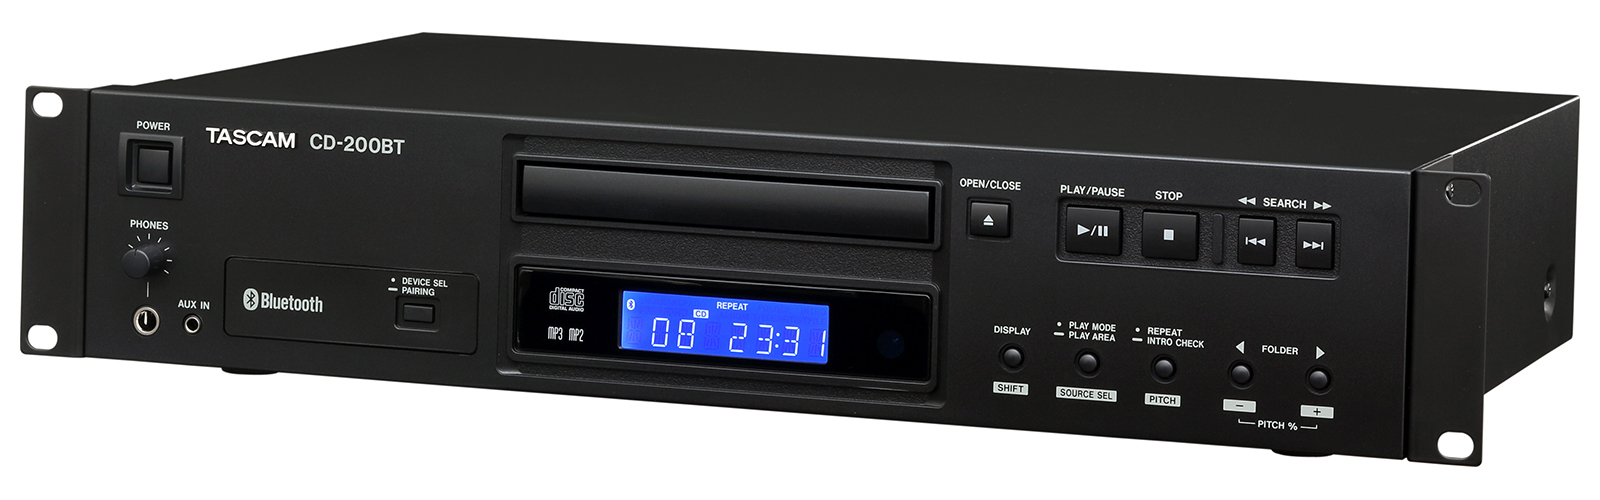 Tascam CD-200BT Rackmount Professional CD Player Owner Manual-pro img